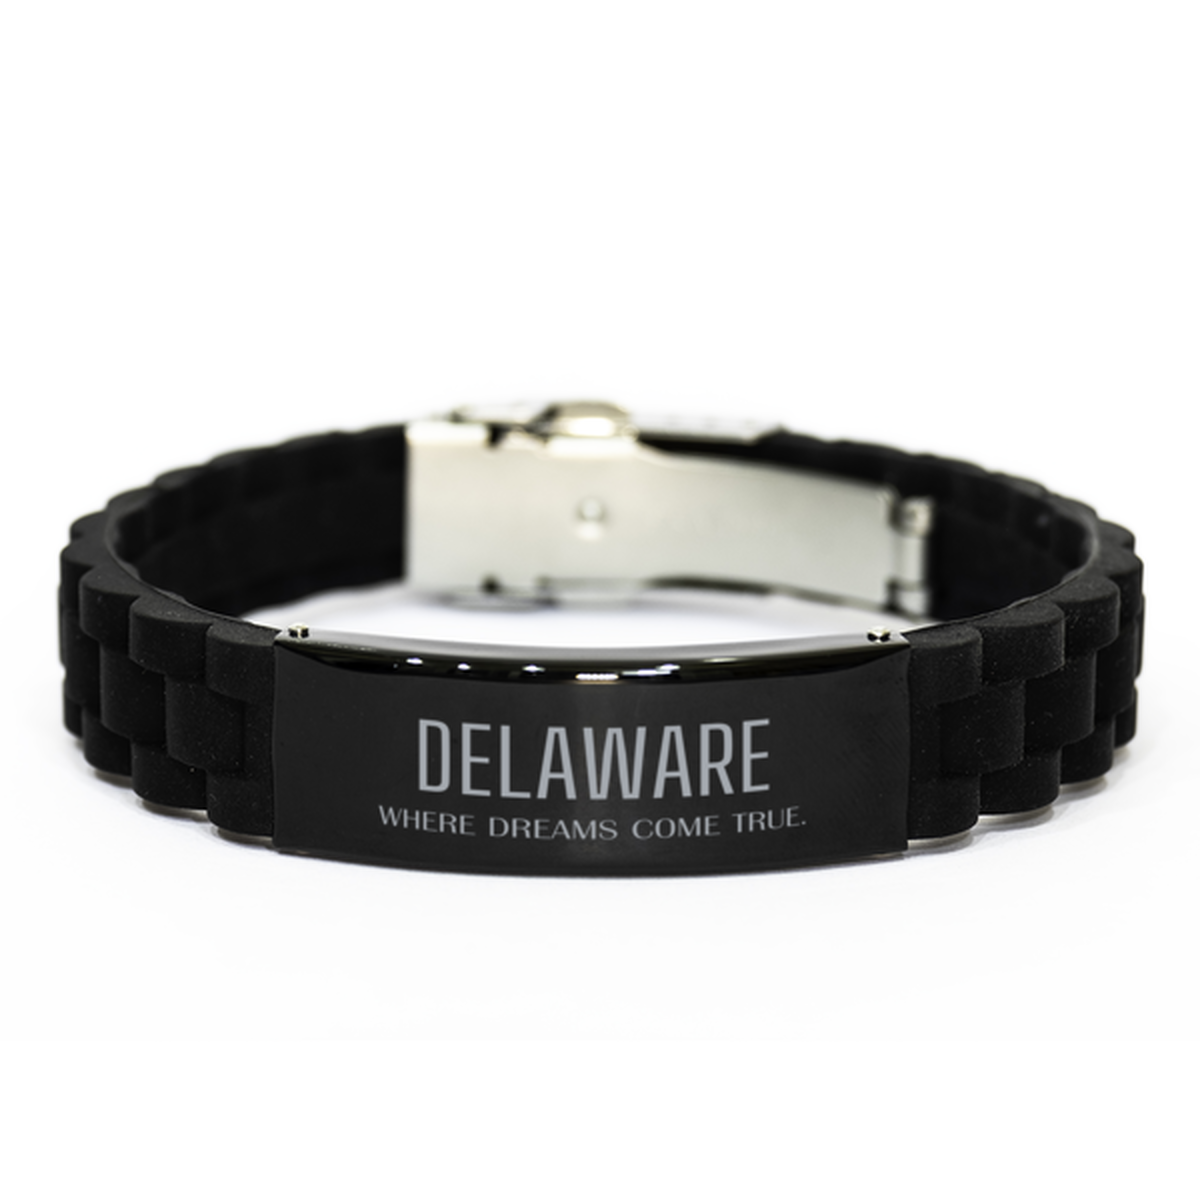 Love Delaware State Black Glidelock Clasp Bracelet, Delaware Where dreams come true, Birthday Inspirational Gifts For Delaware Men, Women, Friends